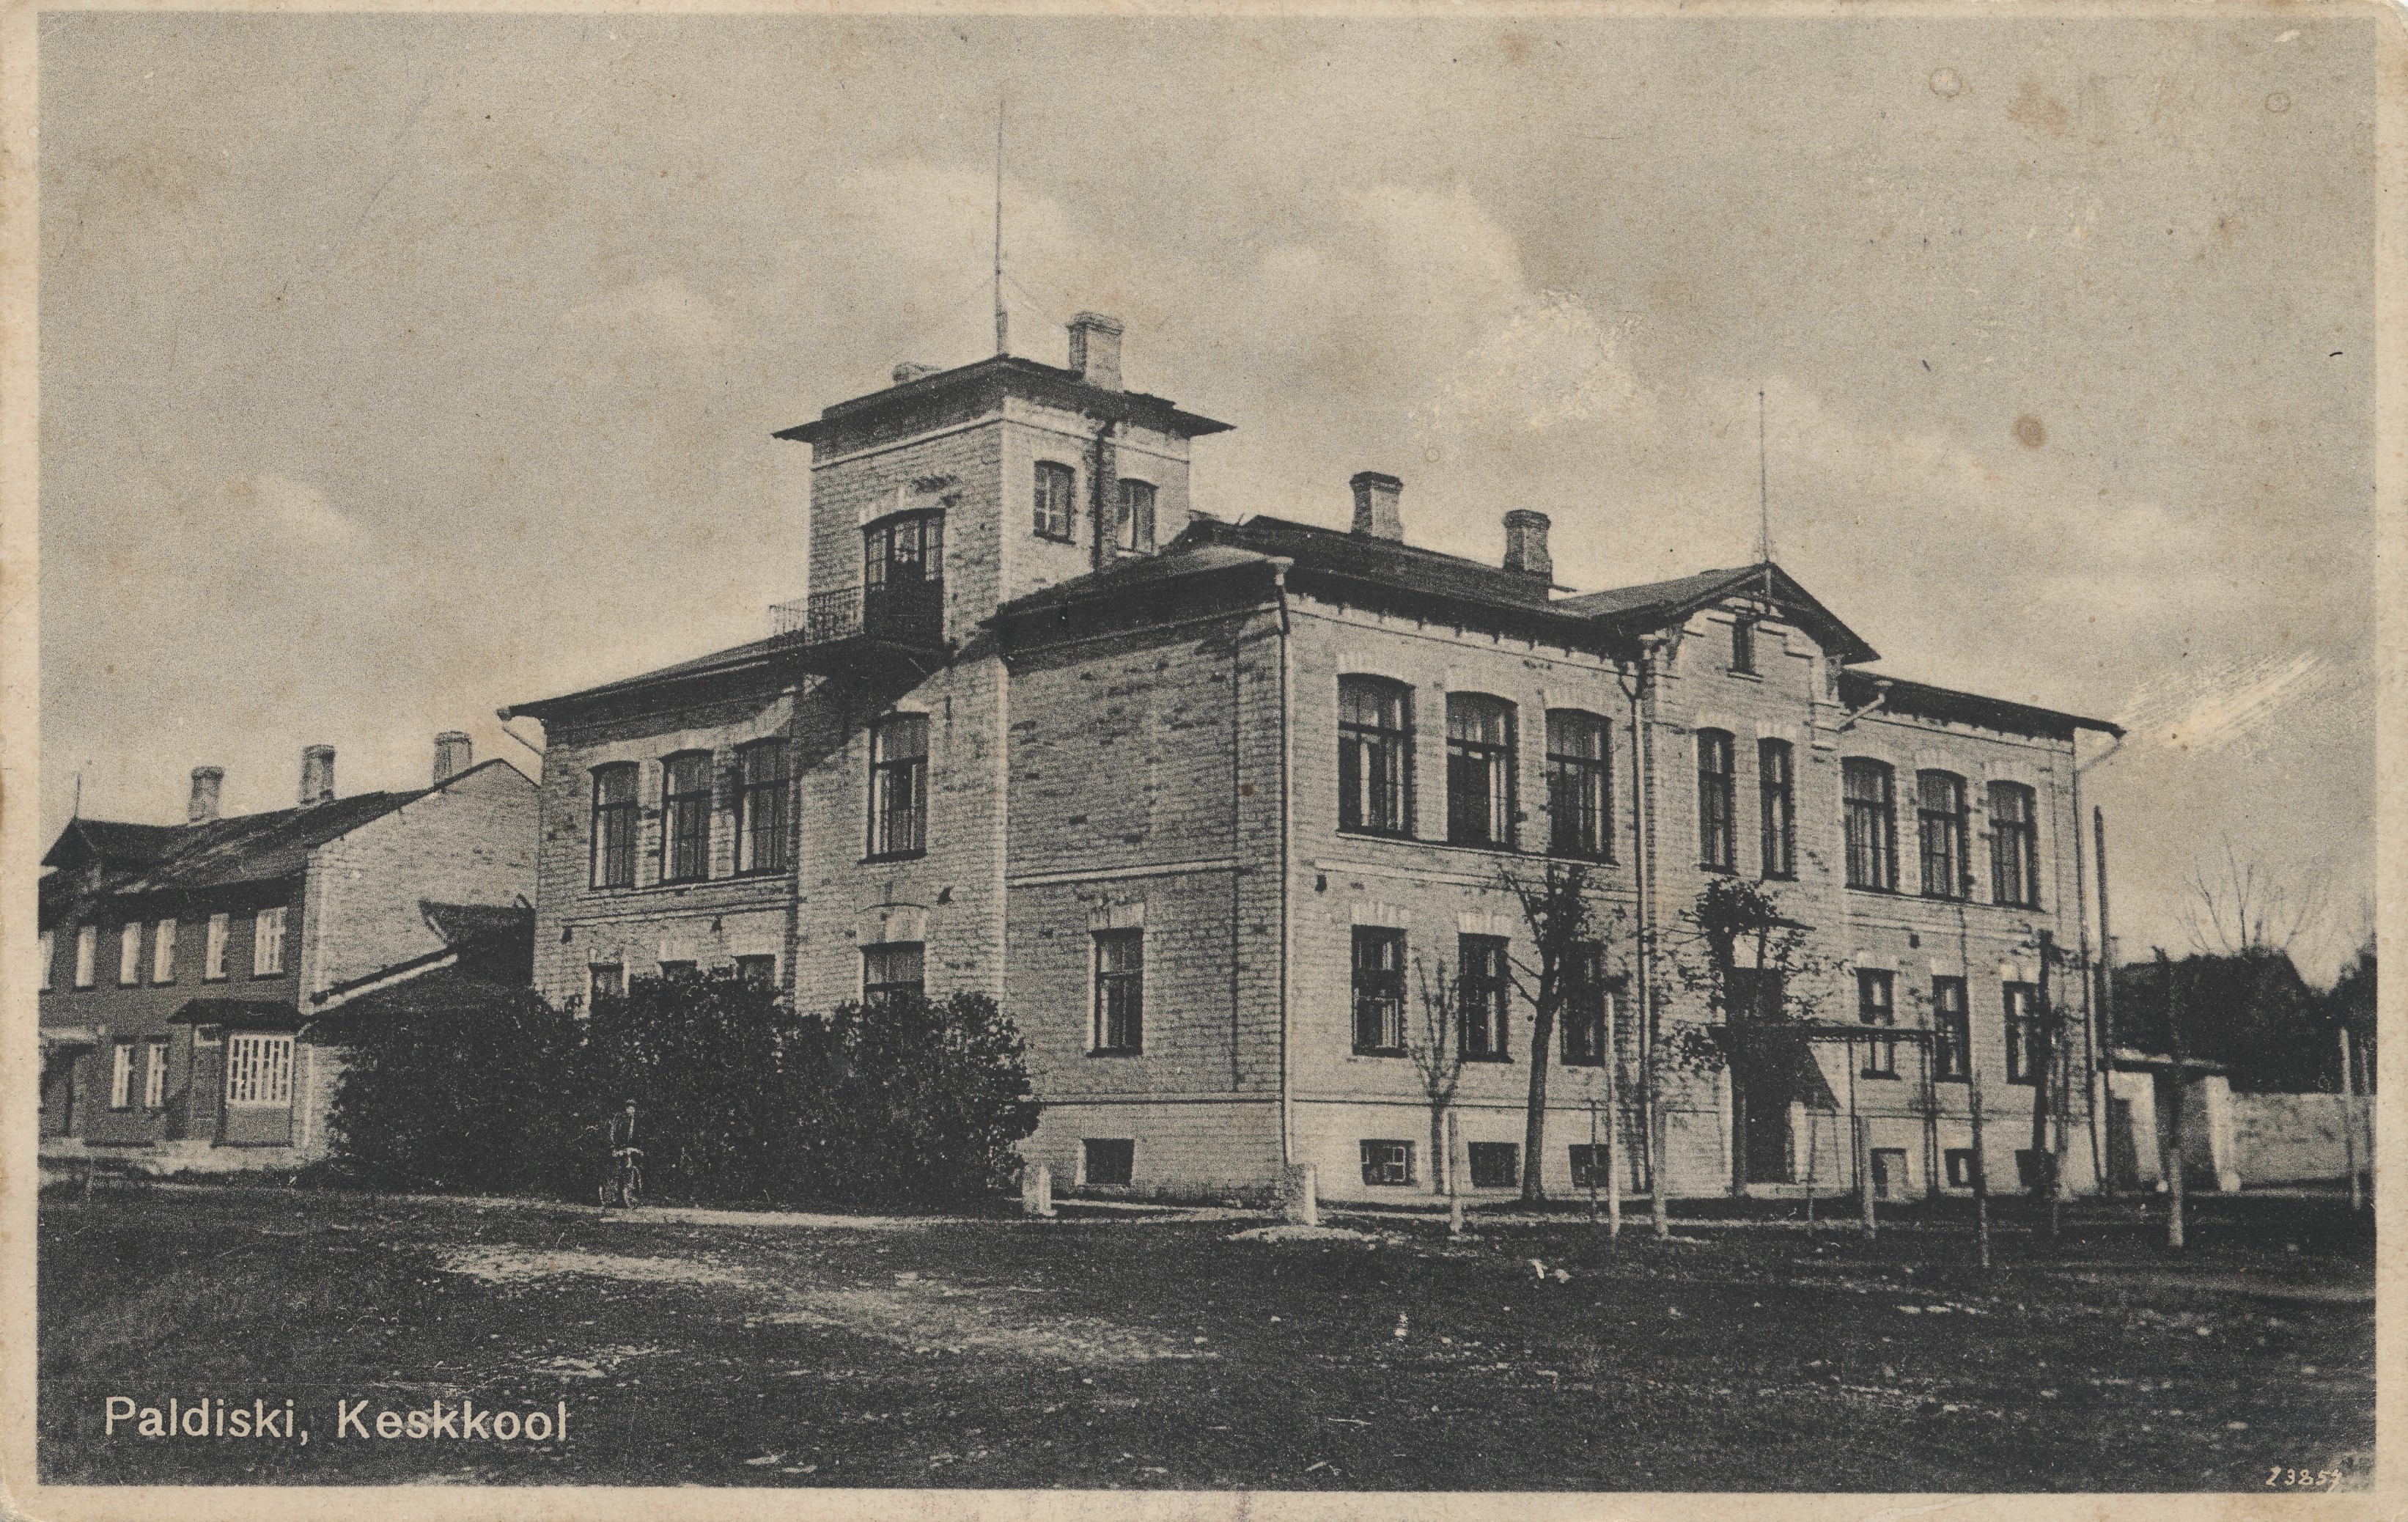 Paldiski High School